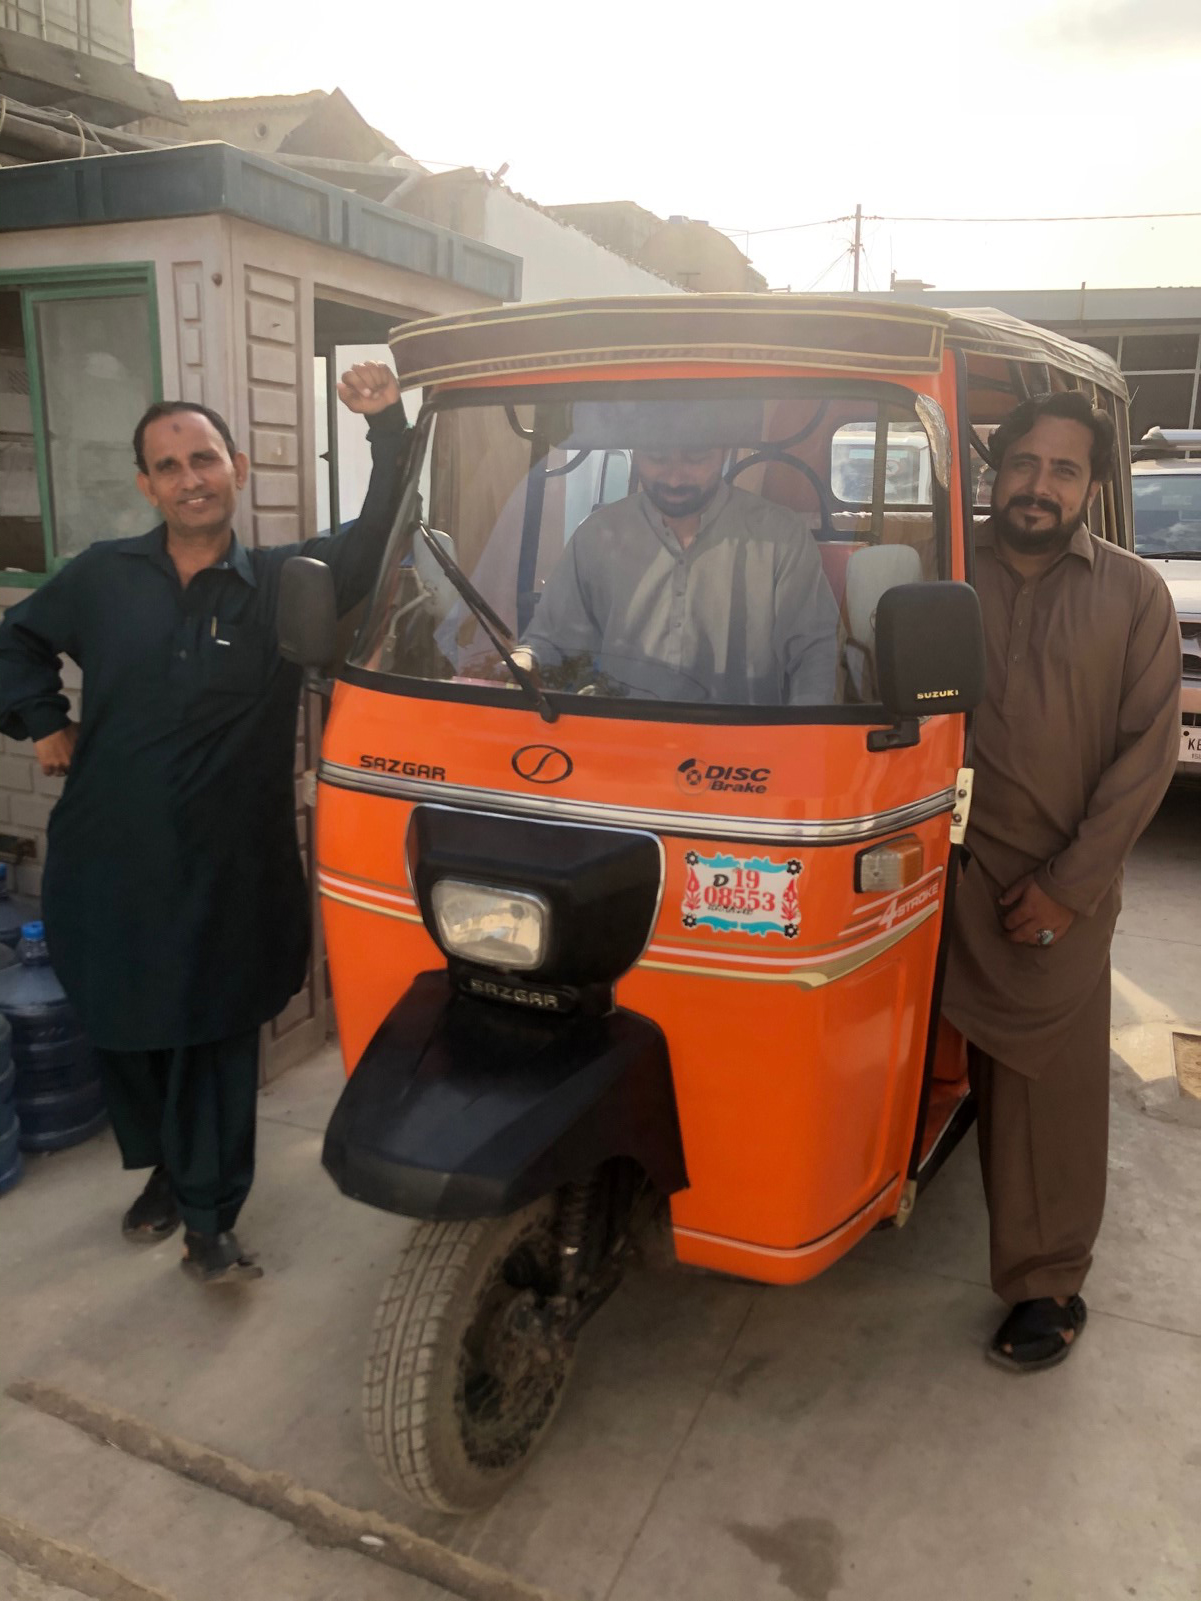 The health promotion tuktuk